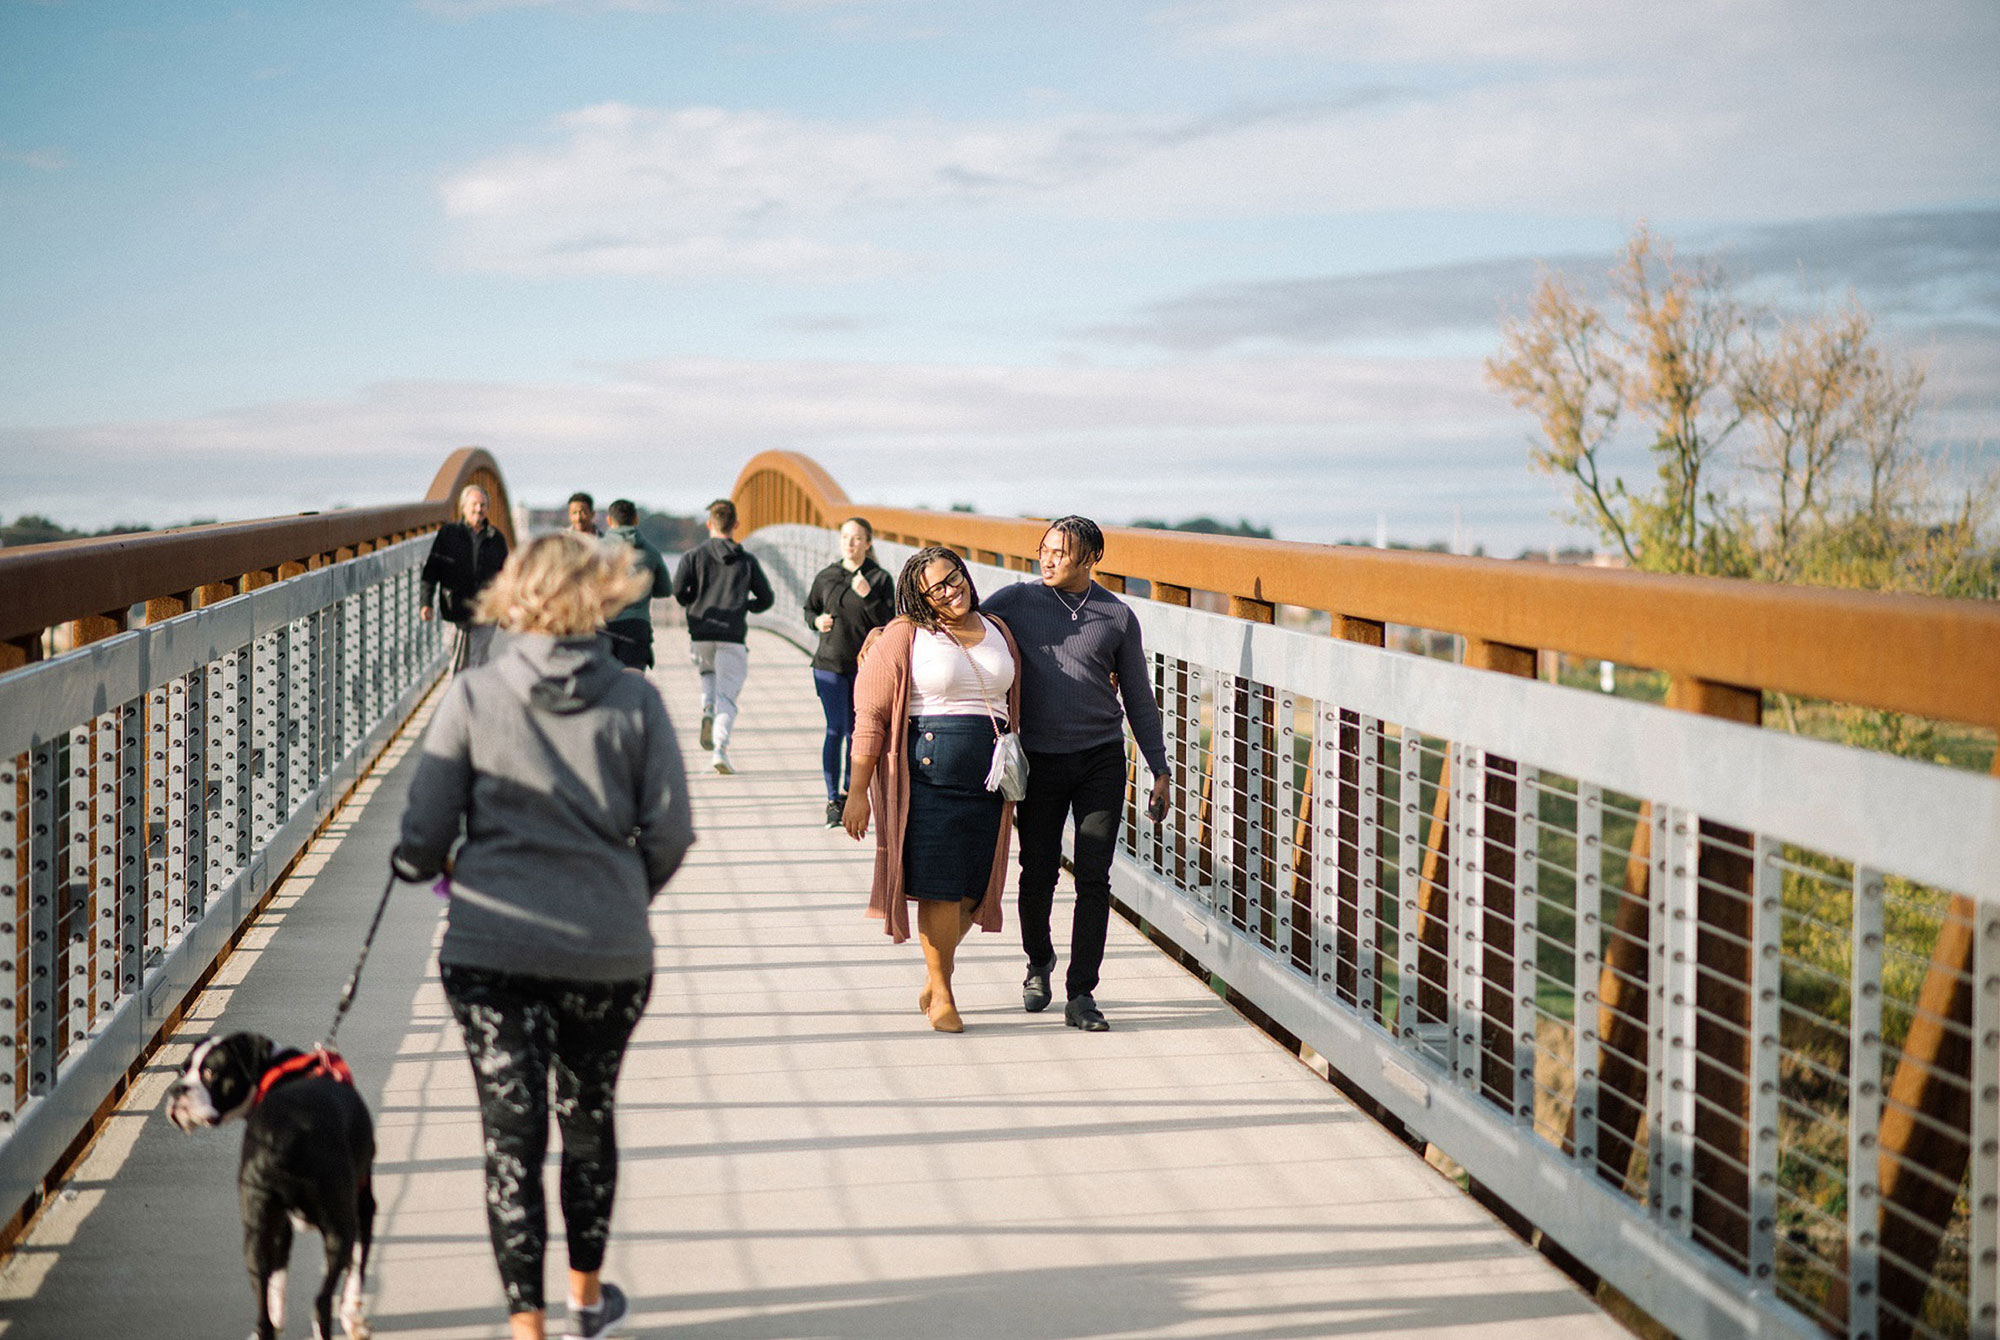 people walking on a bridge